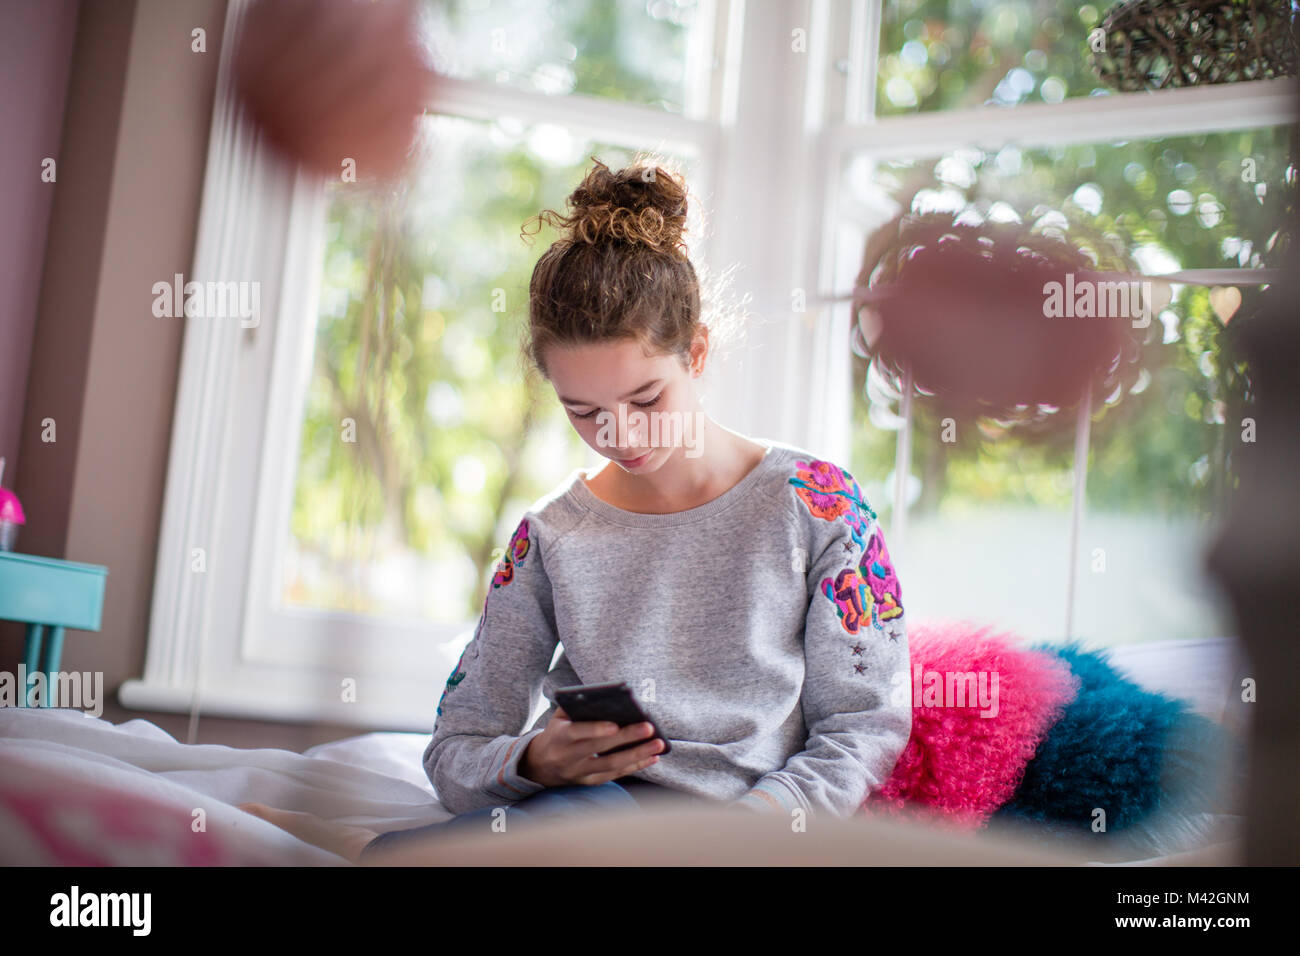 Teenager in bedroom looking at smartphone Stock Photo